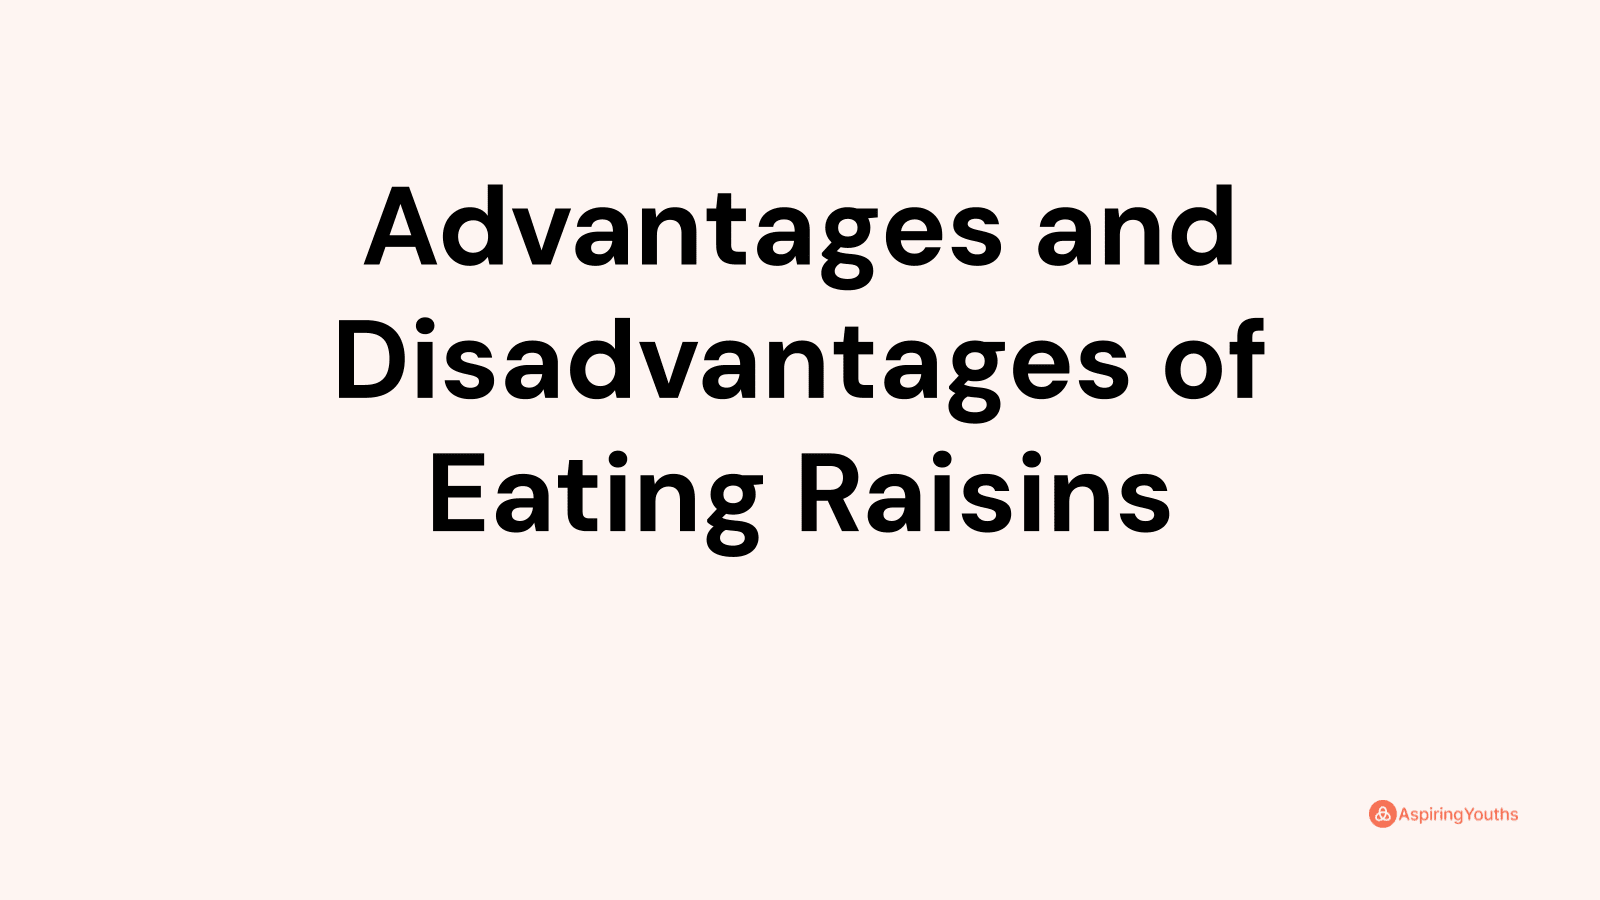 Advantages and disadvantages of Eating Raisins